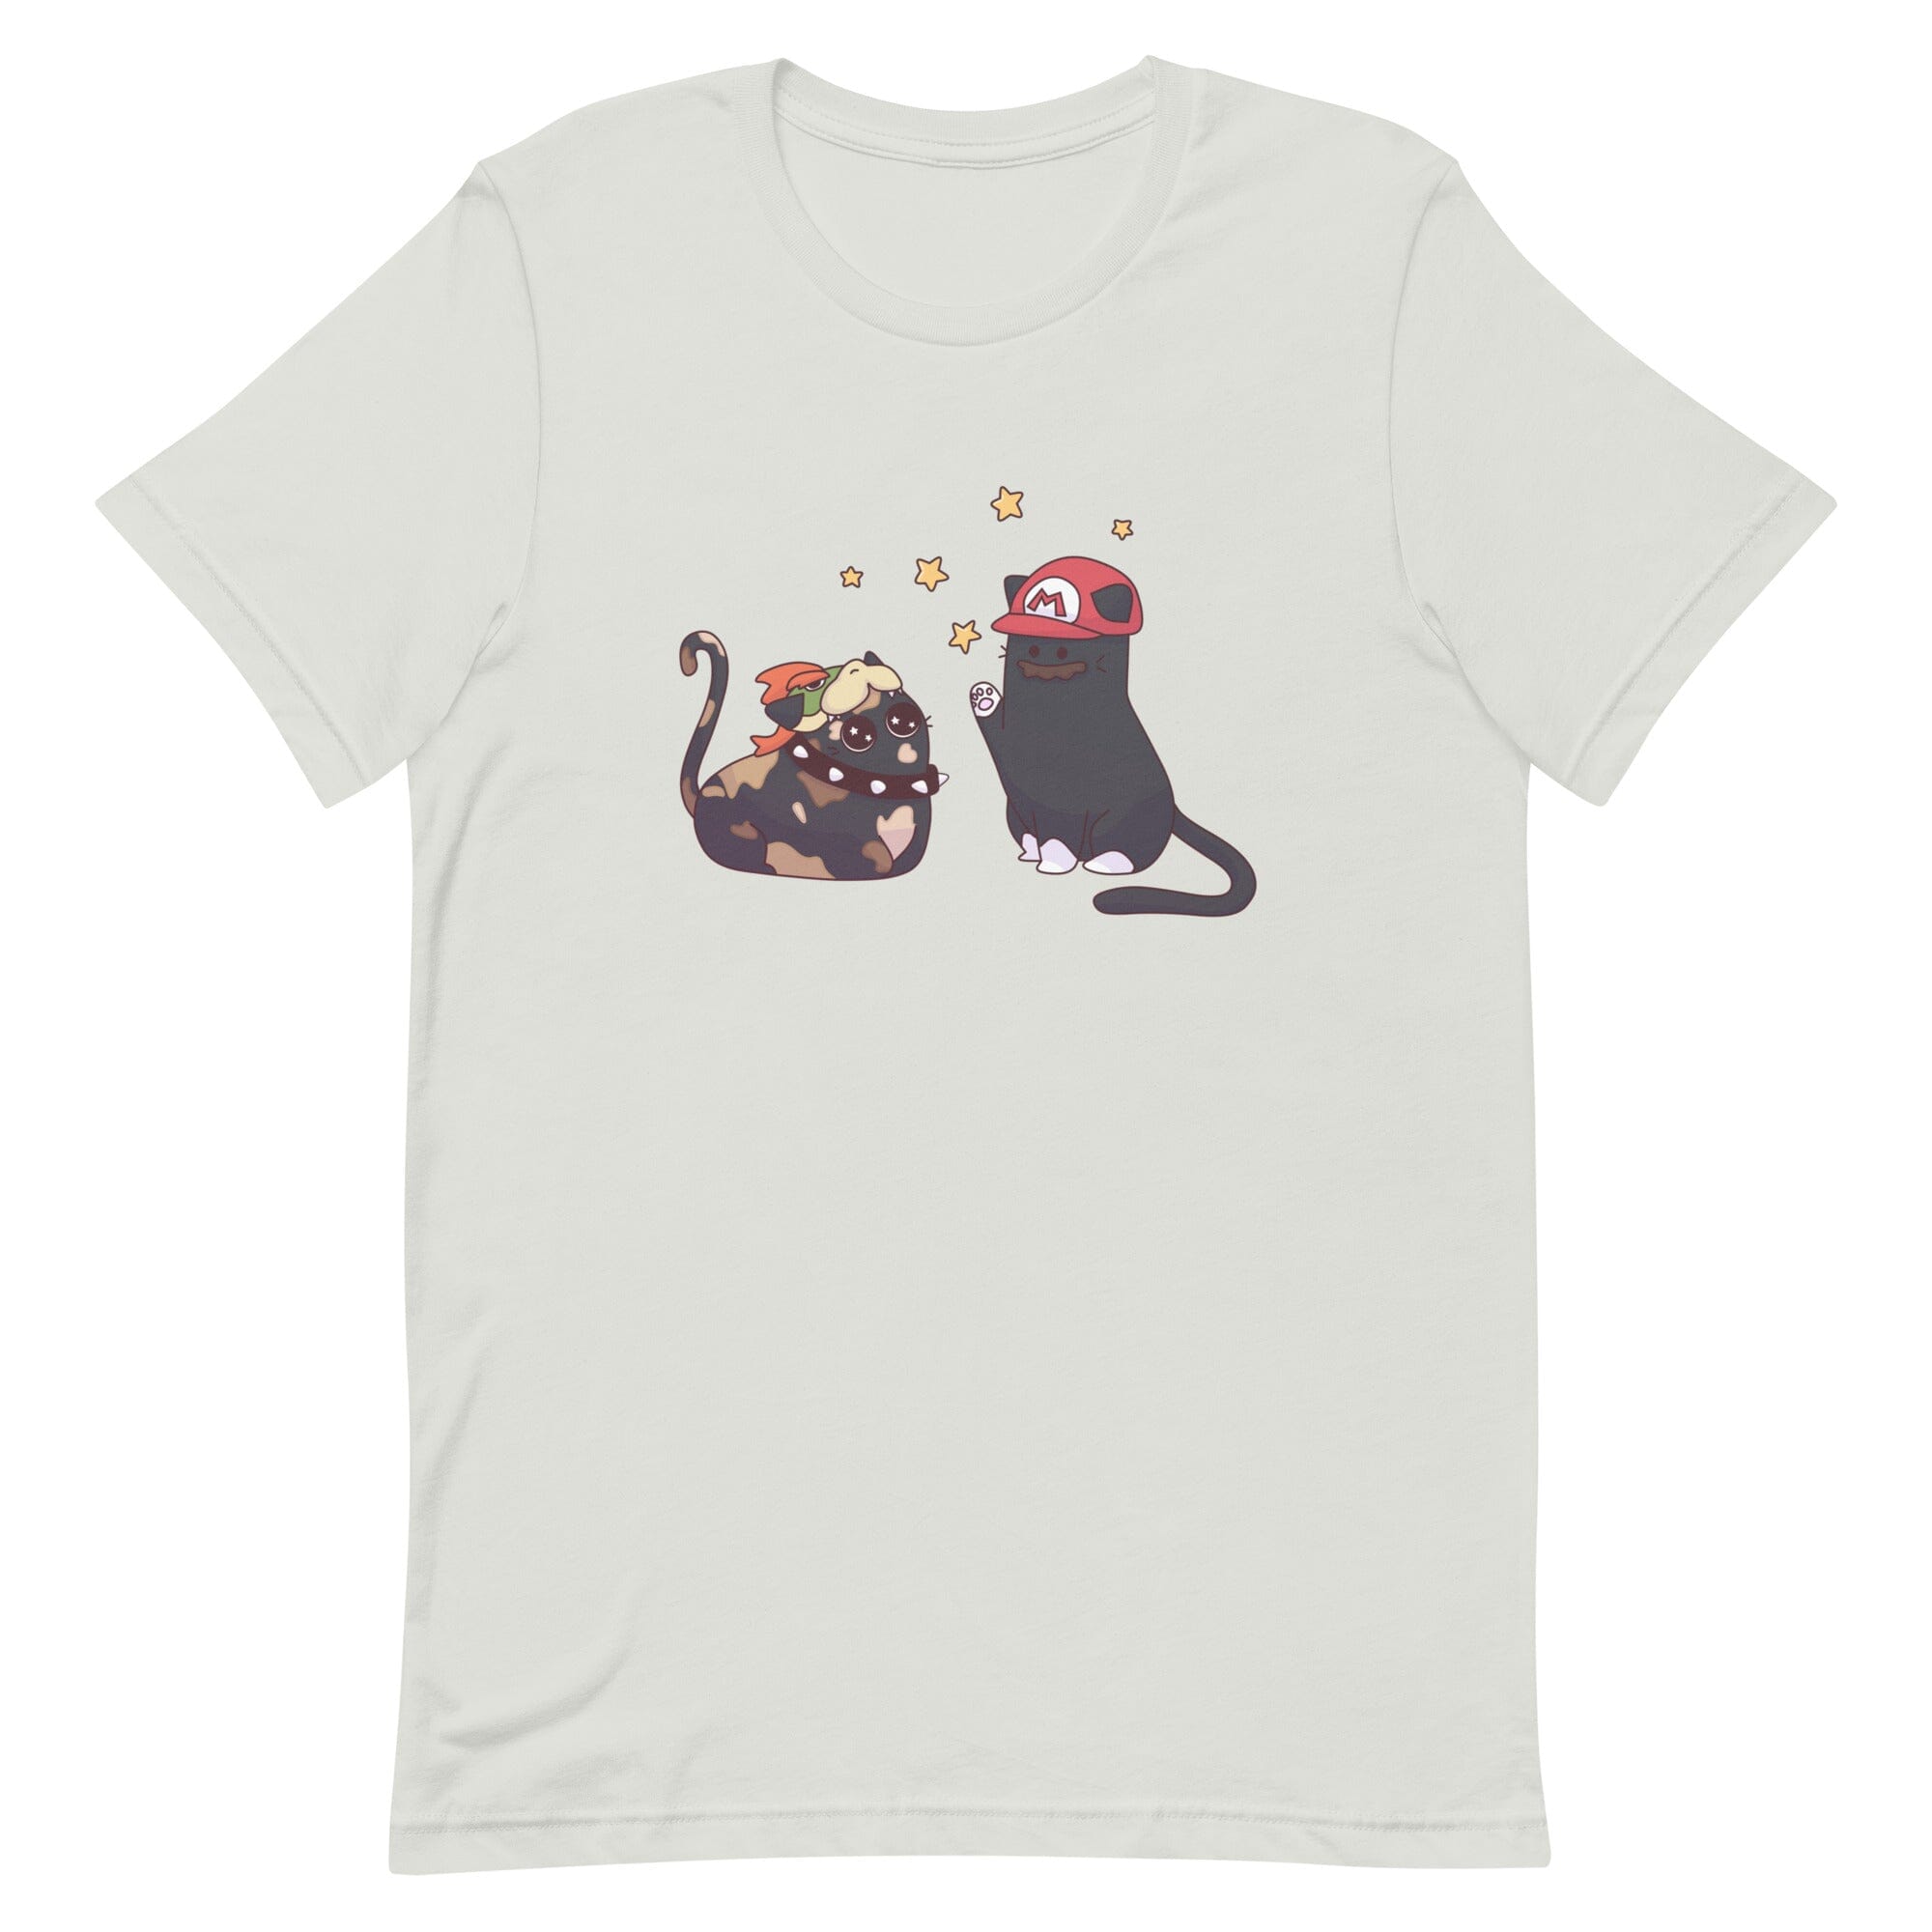 Team Bowser & Mario Kitties | Unisex t-shirt | TTI Stream Threads & Thistles Inventory Silver S 